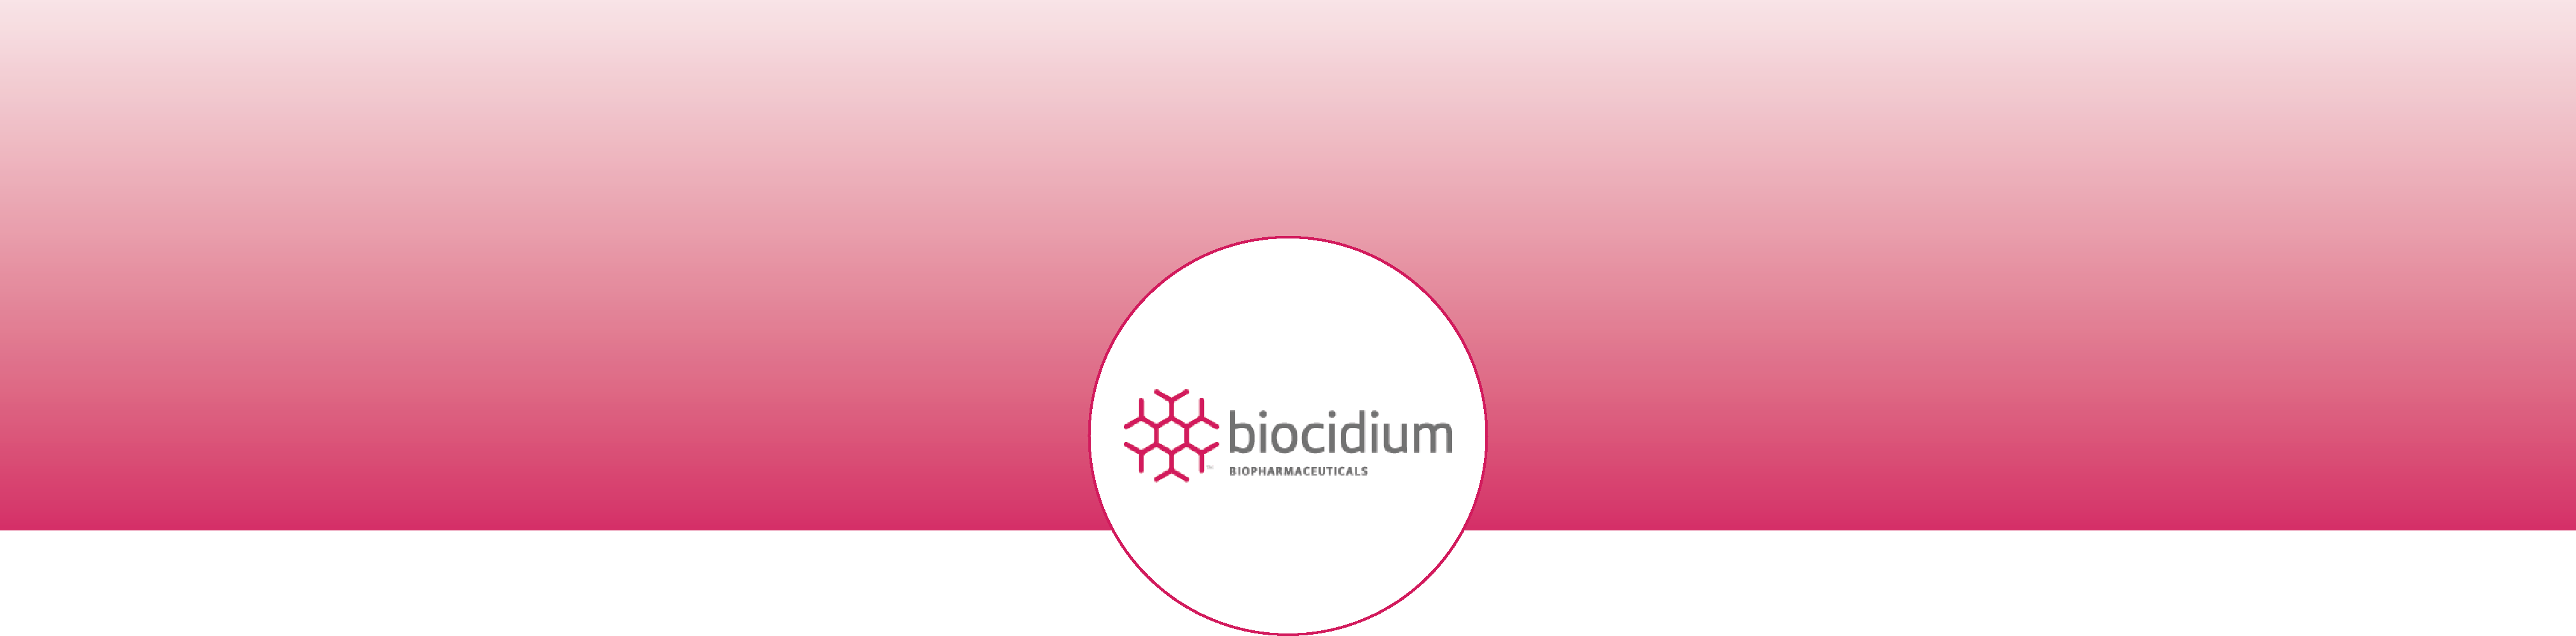 banner_biocidium